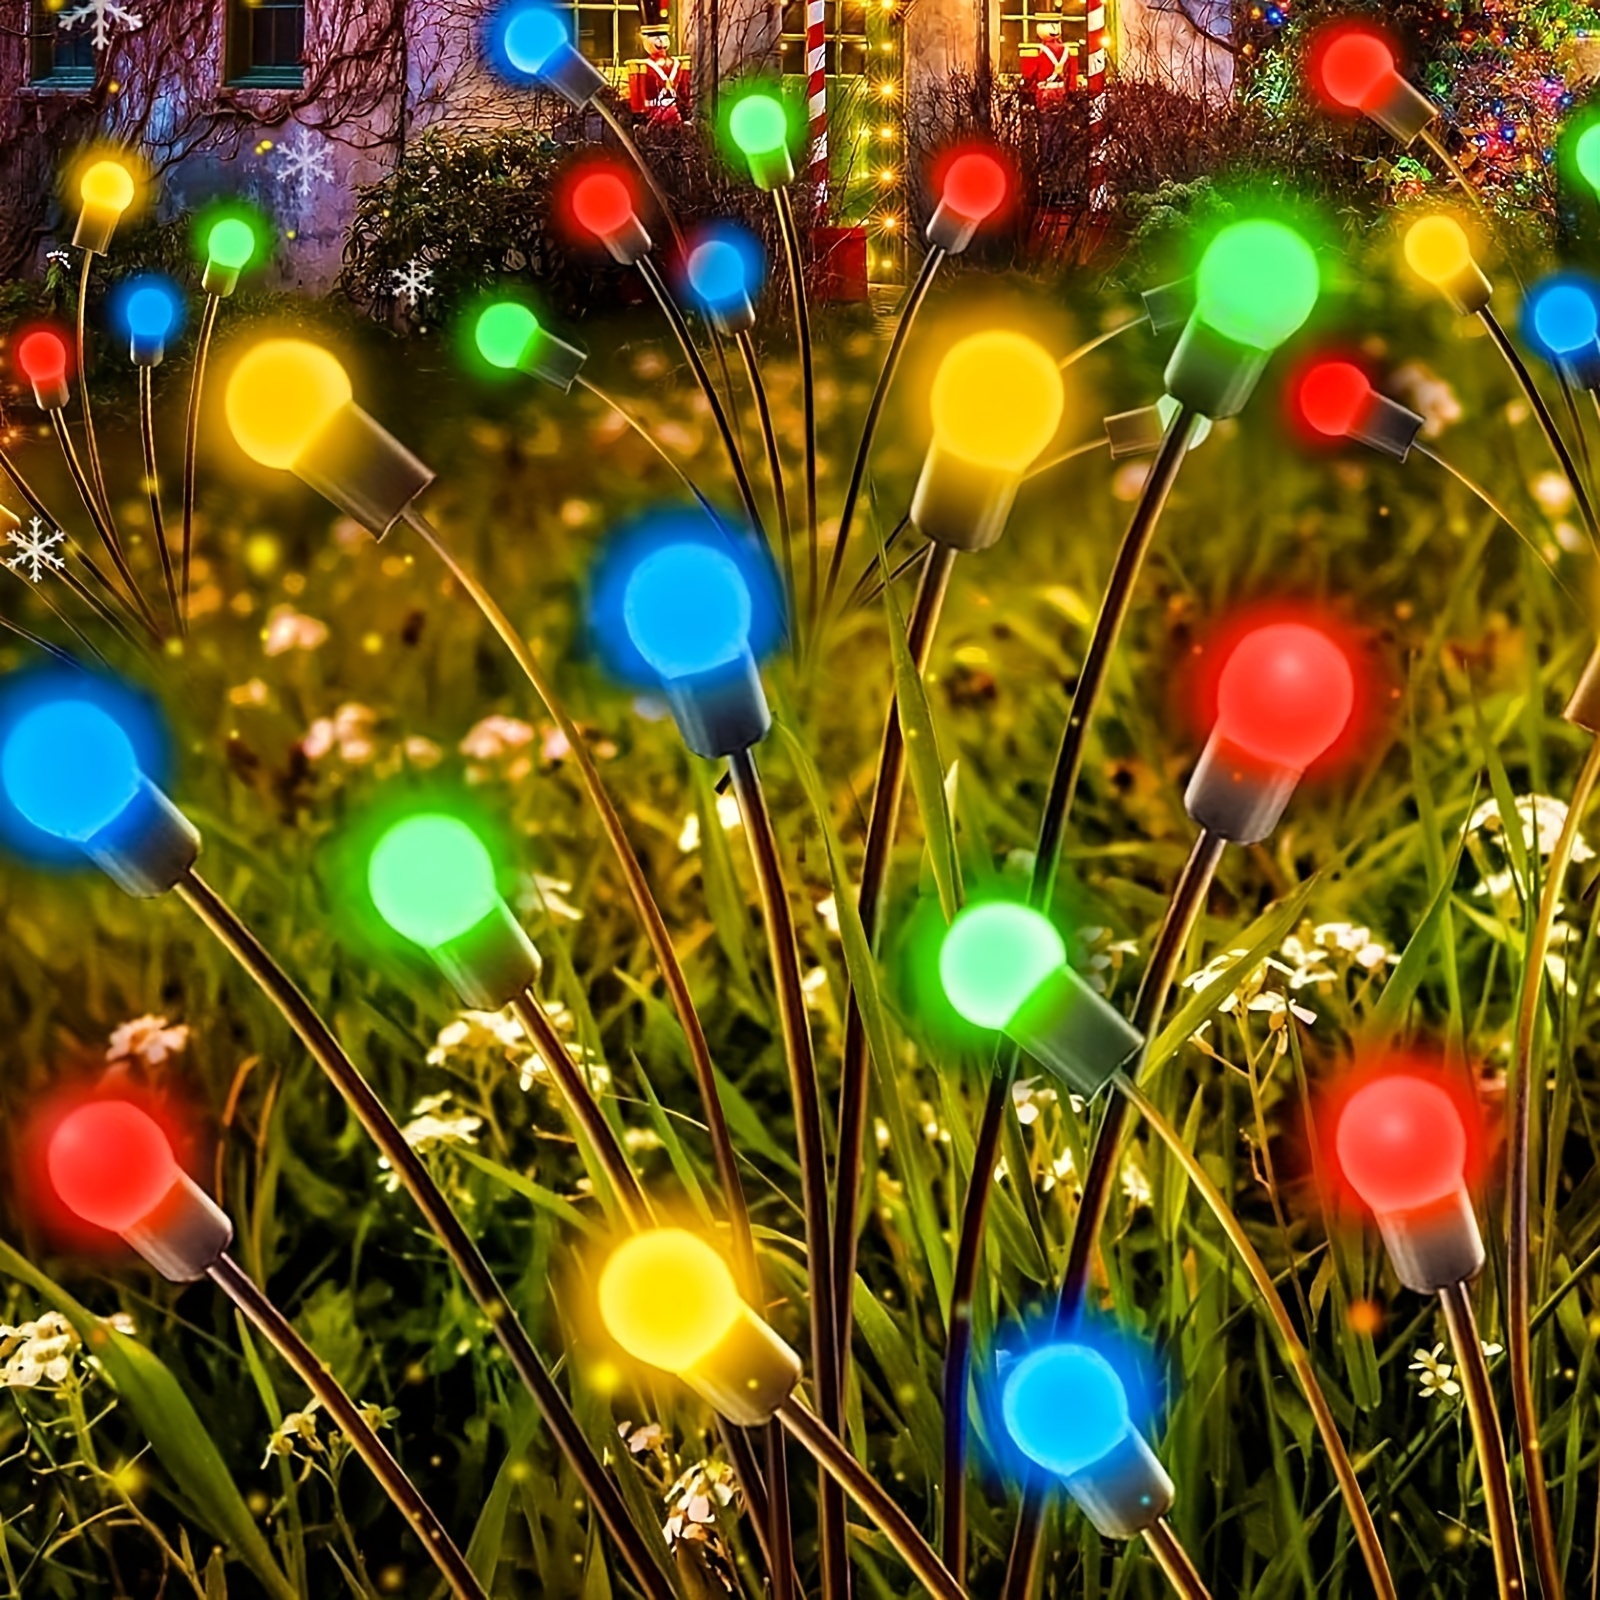 

2-piece Solar Firefly Lights - Multicolor, Waterproof Outdoor Decorative Lights For Garden Pathways, Yard Landscaping, Weddings & Christmas